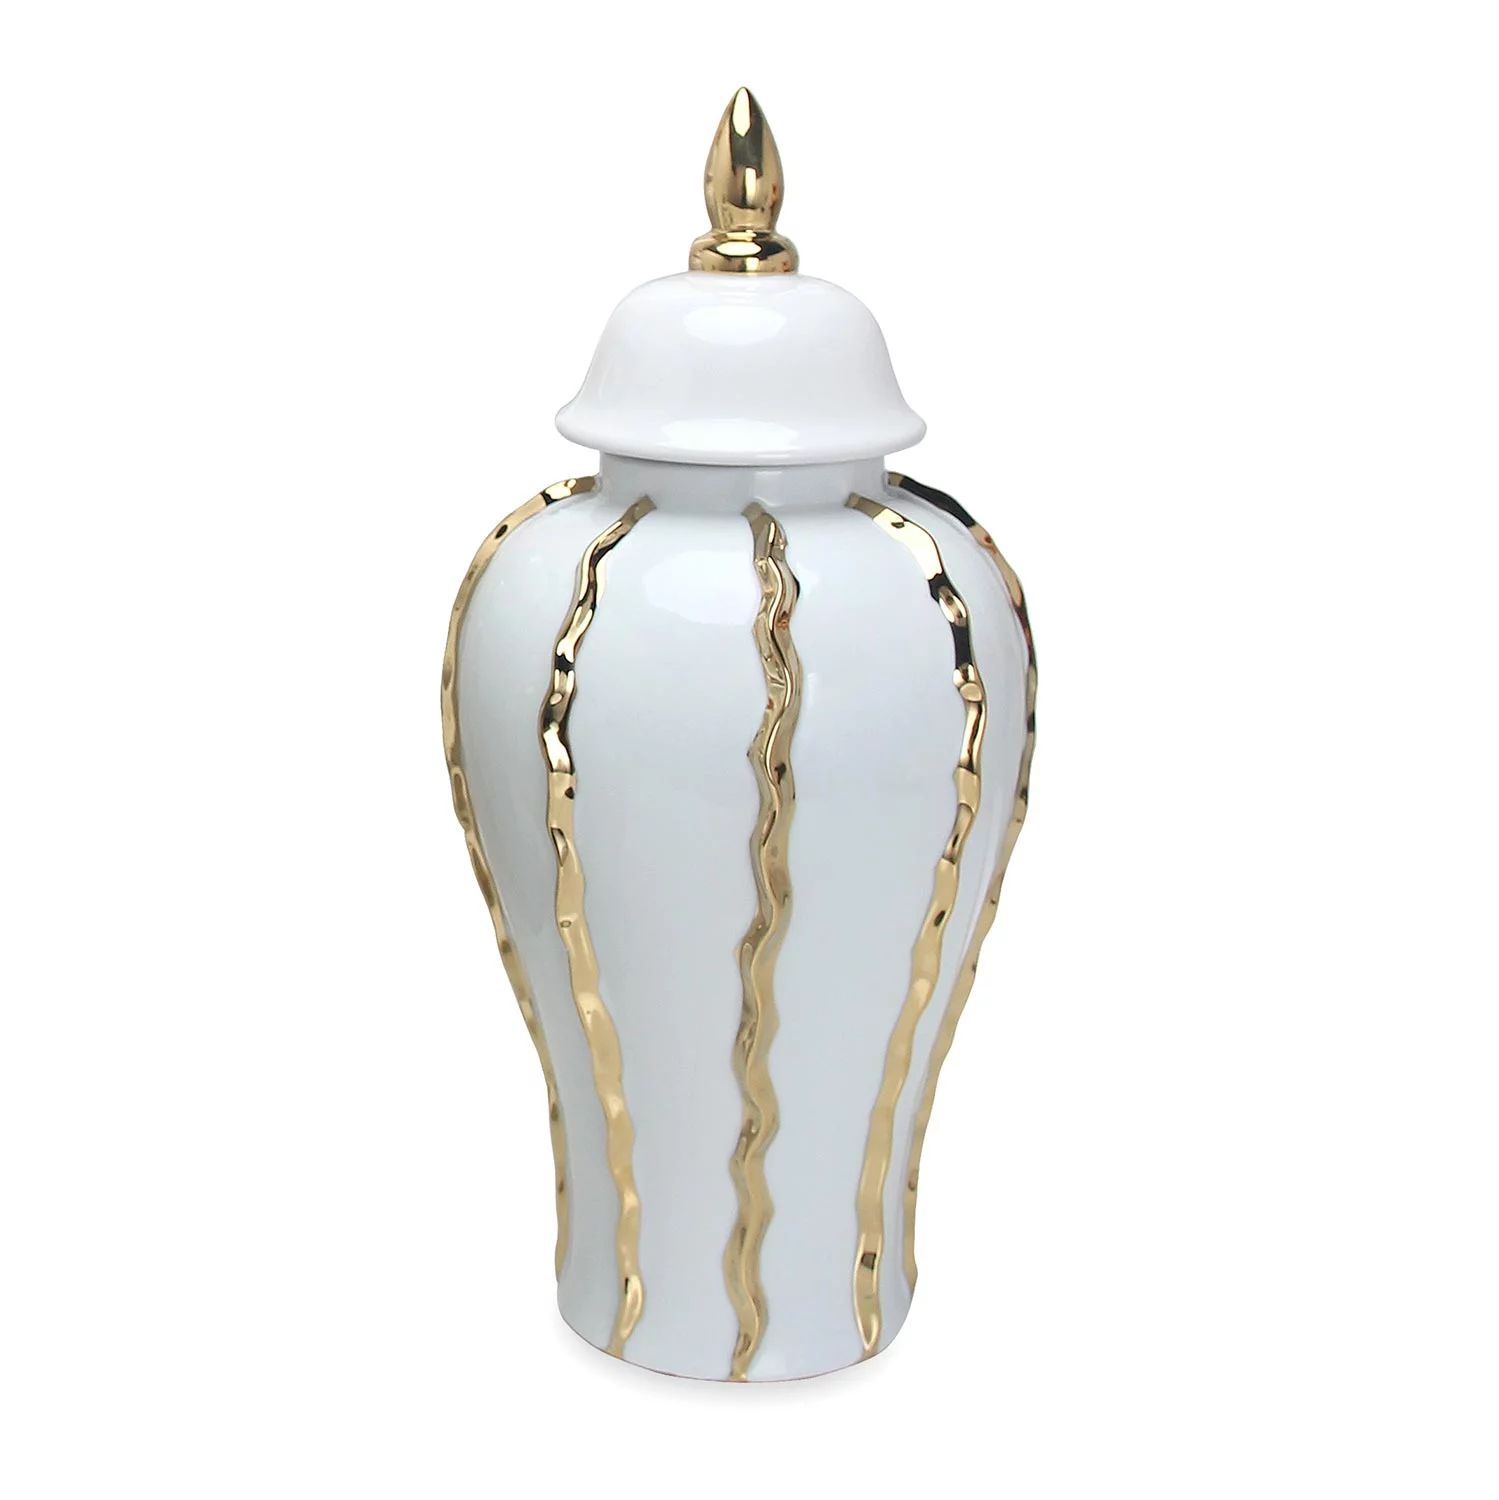 Elegant White Ceramic Ginger Jar with Gold Accents - Timeless Home Decor | Walmart (US)